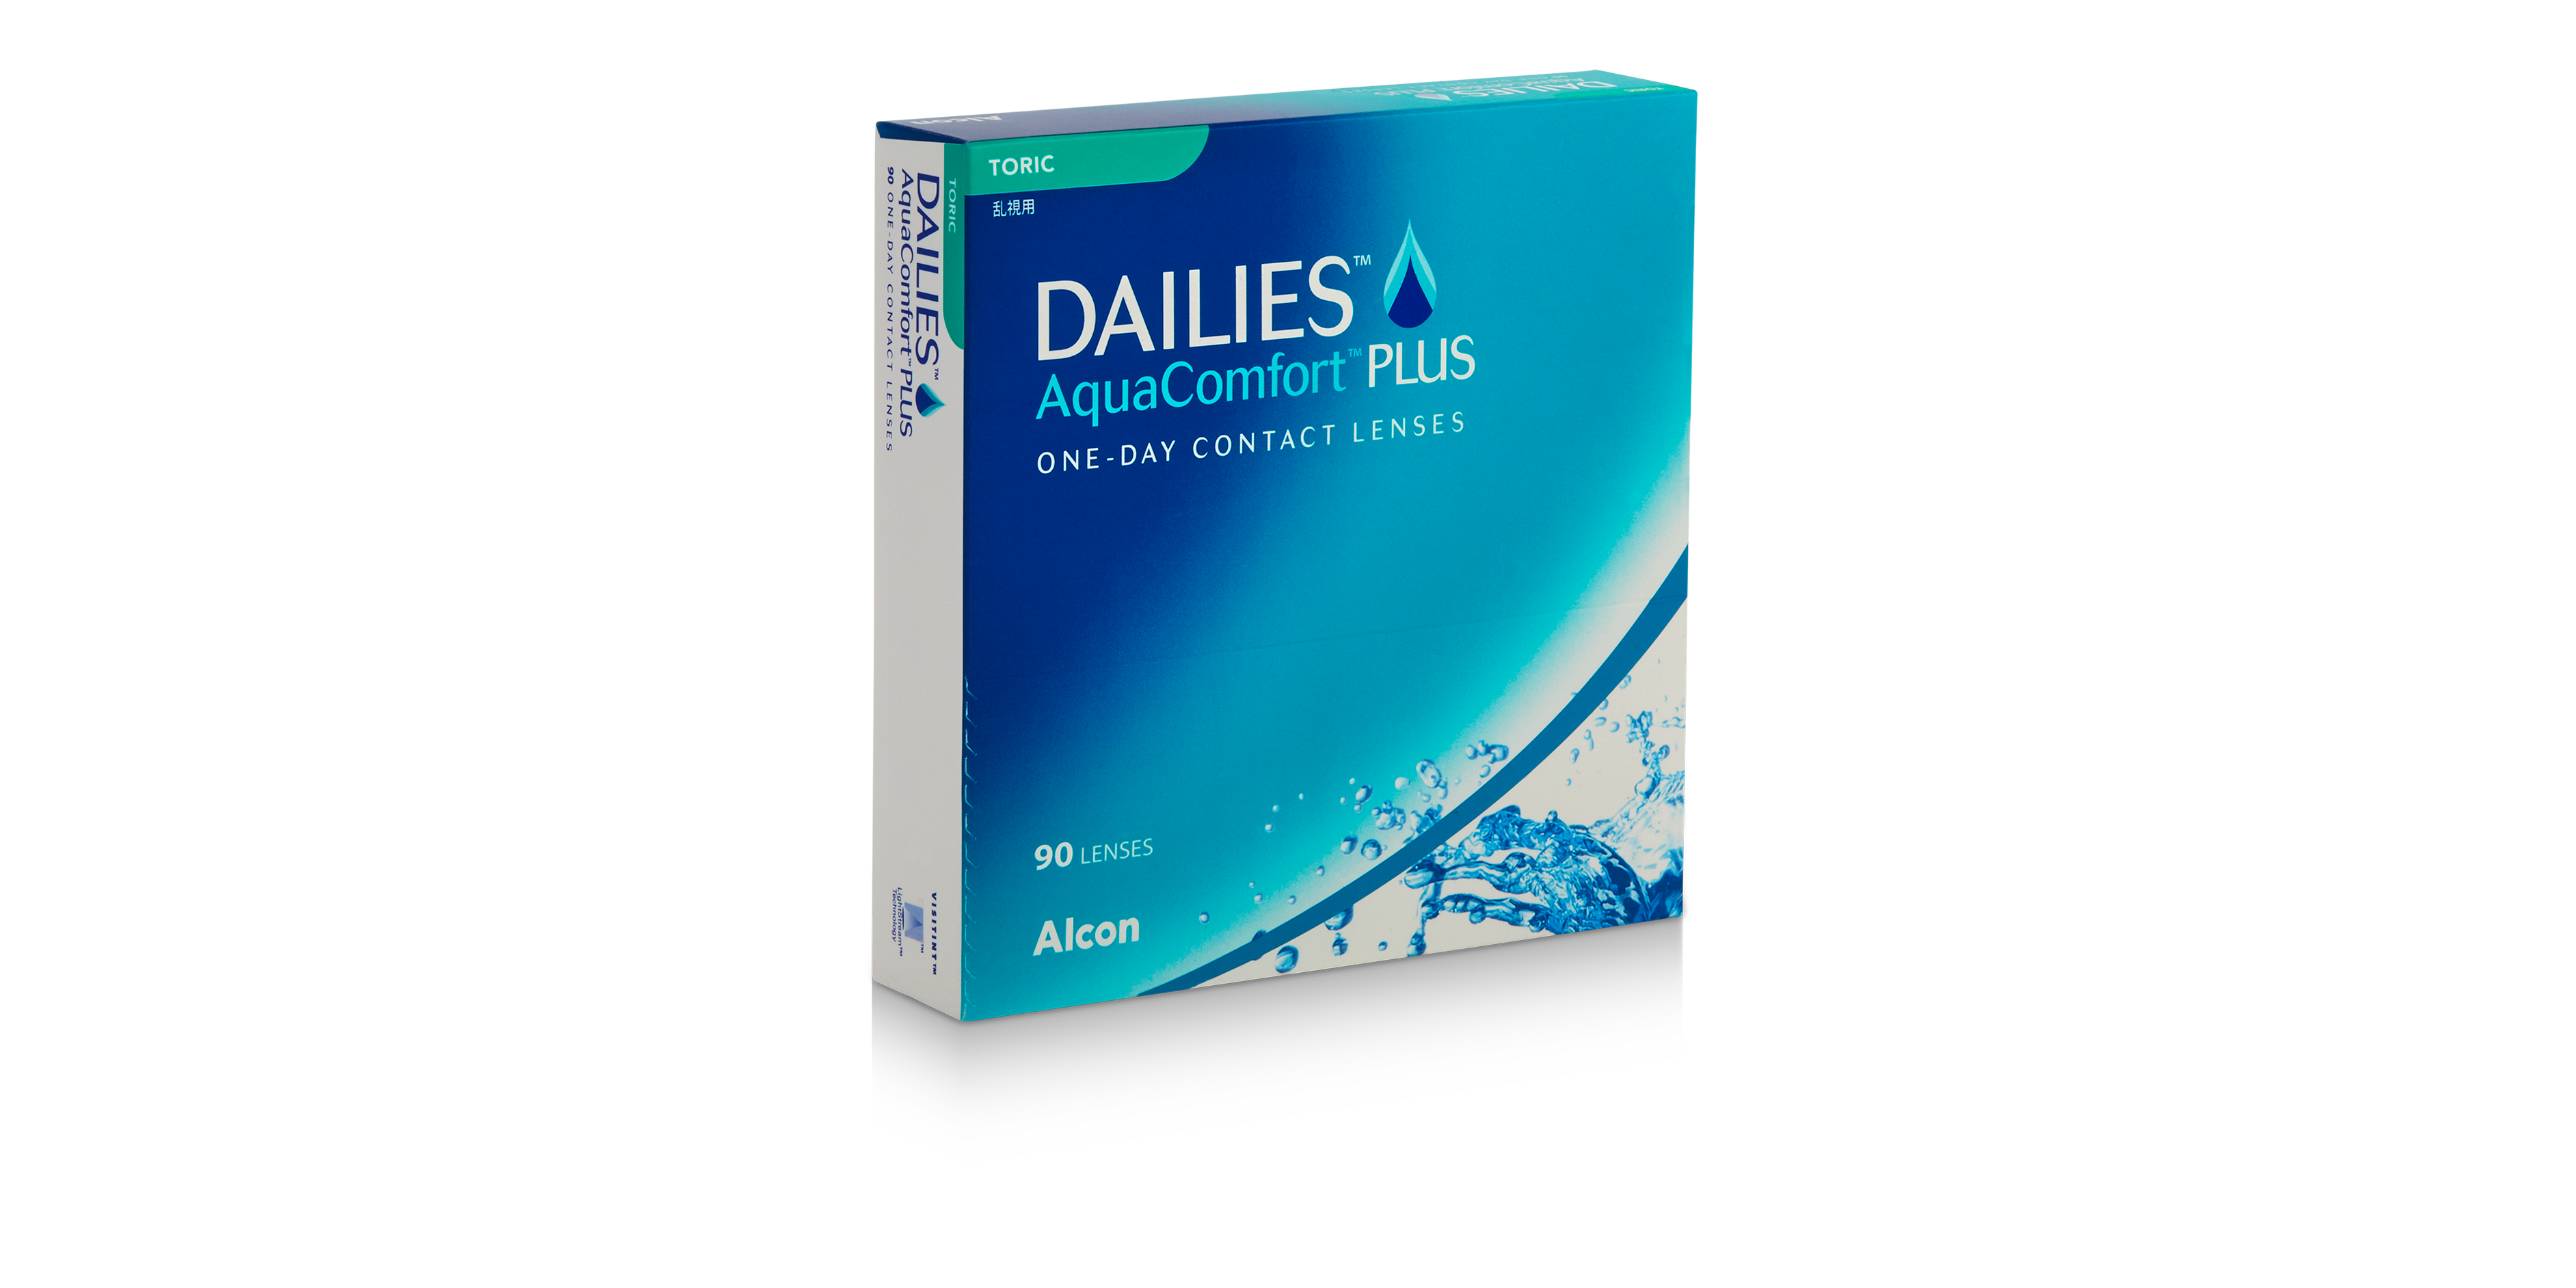 Dailies® AquaComfort Plus® Toric, 90 pack